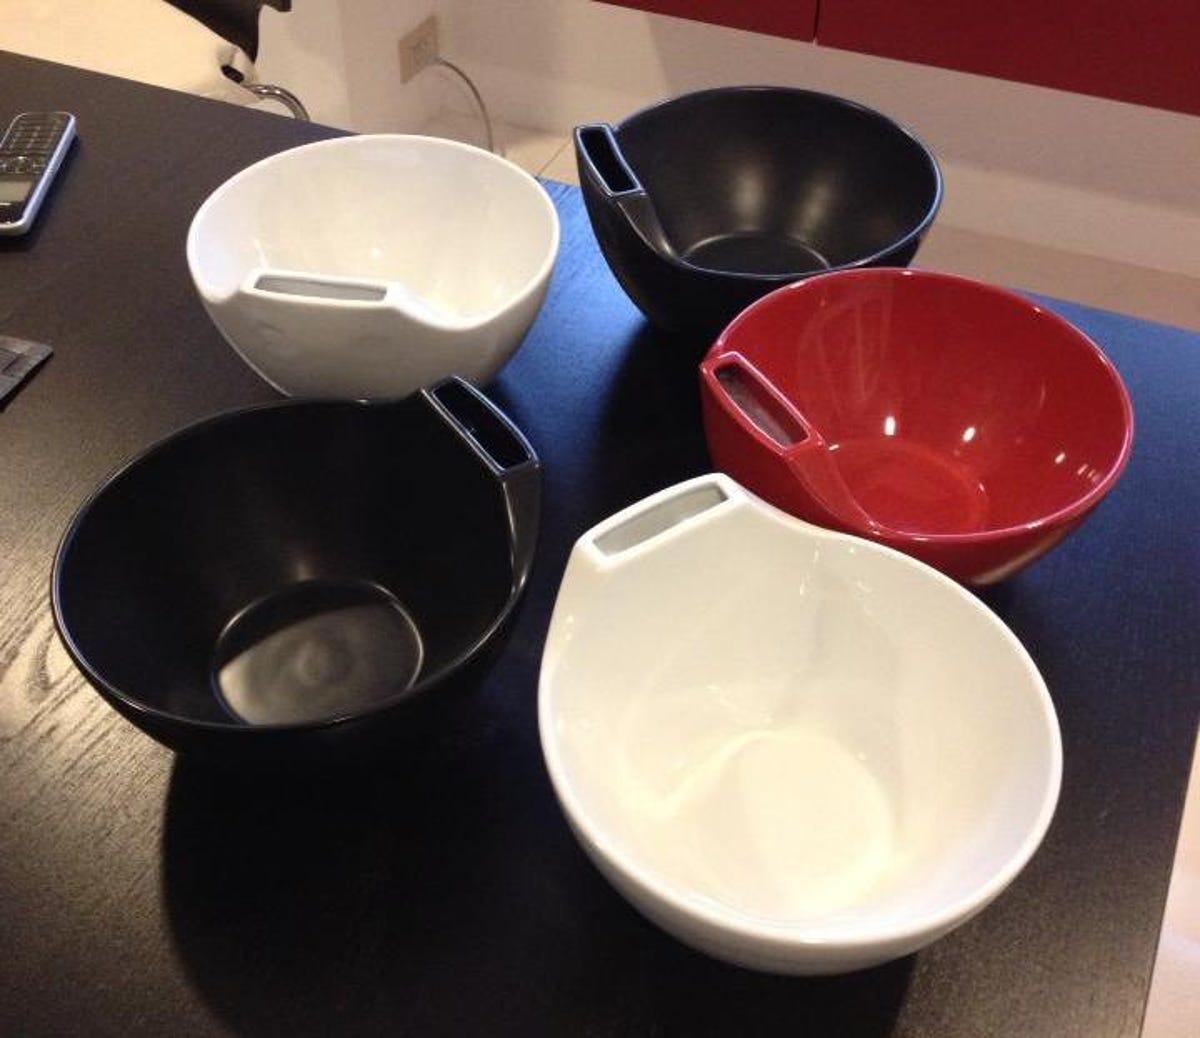 Anti-loneliness ramen bowls